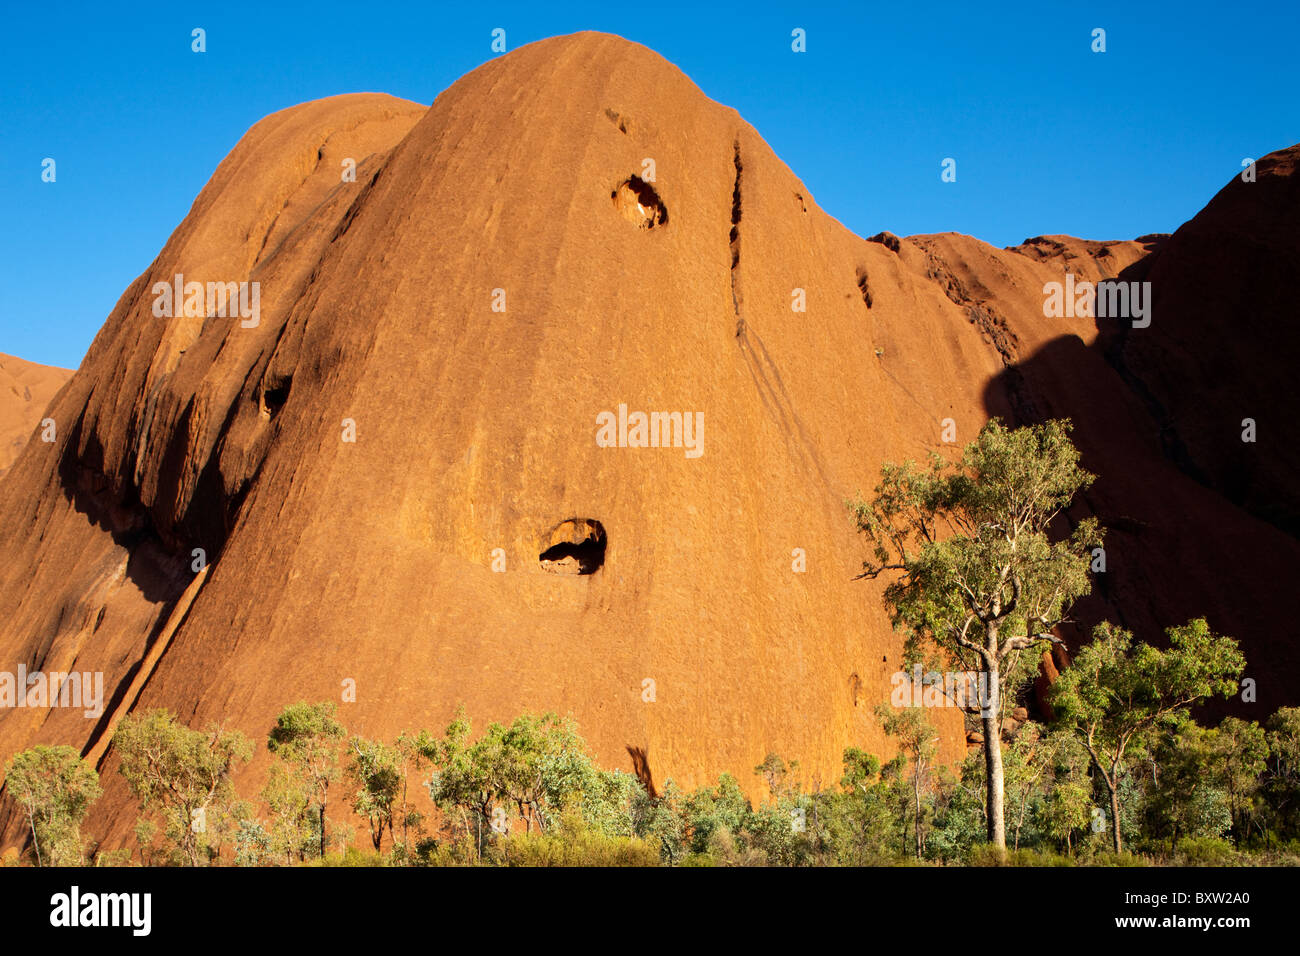 Australien-Northern Territory Uluru - Kata Tjuta National Park Wüste Eiche Bäume an roten Felsen Ayers Rock am Sommermorgen Stockfoto